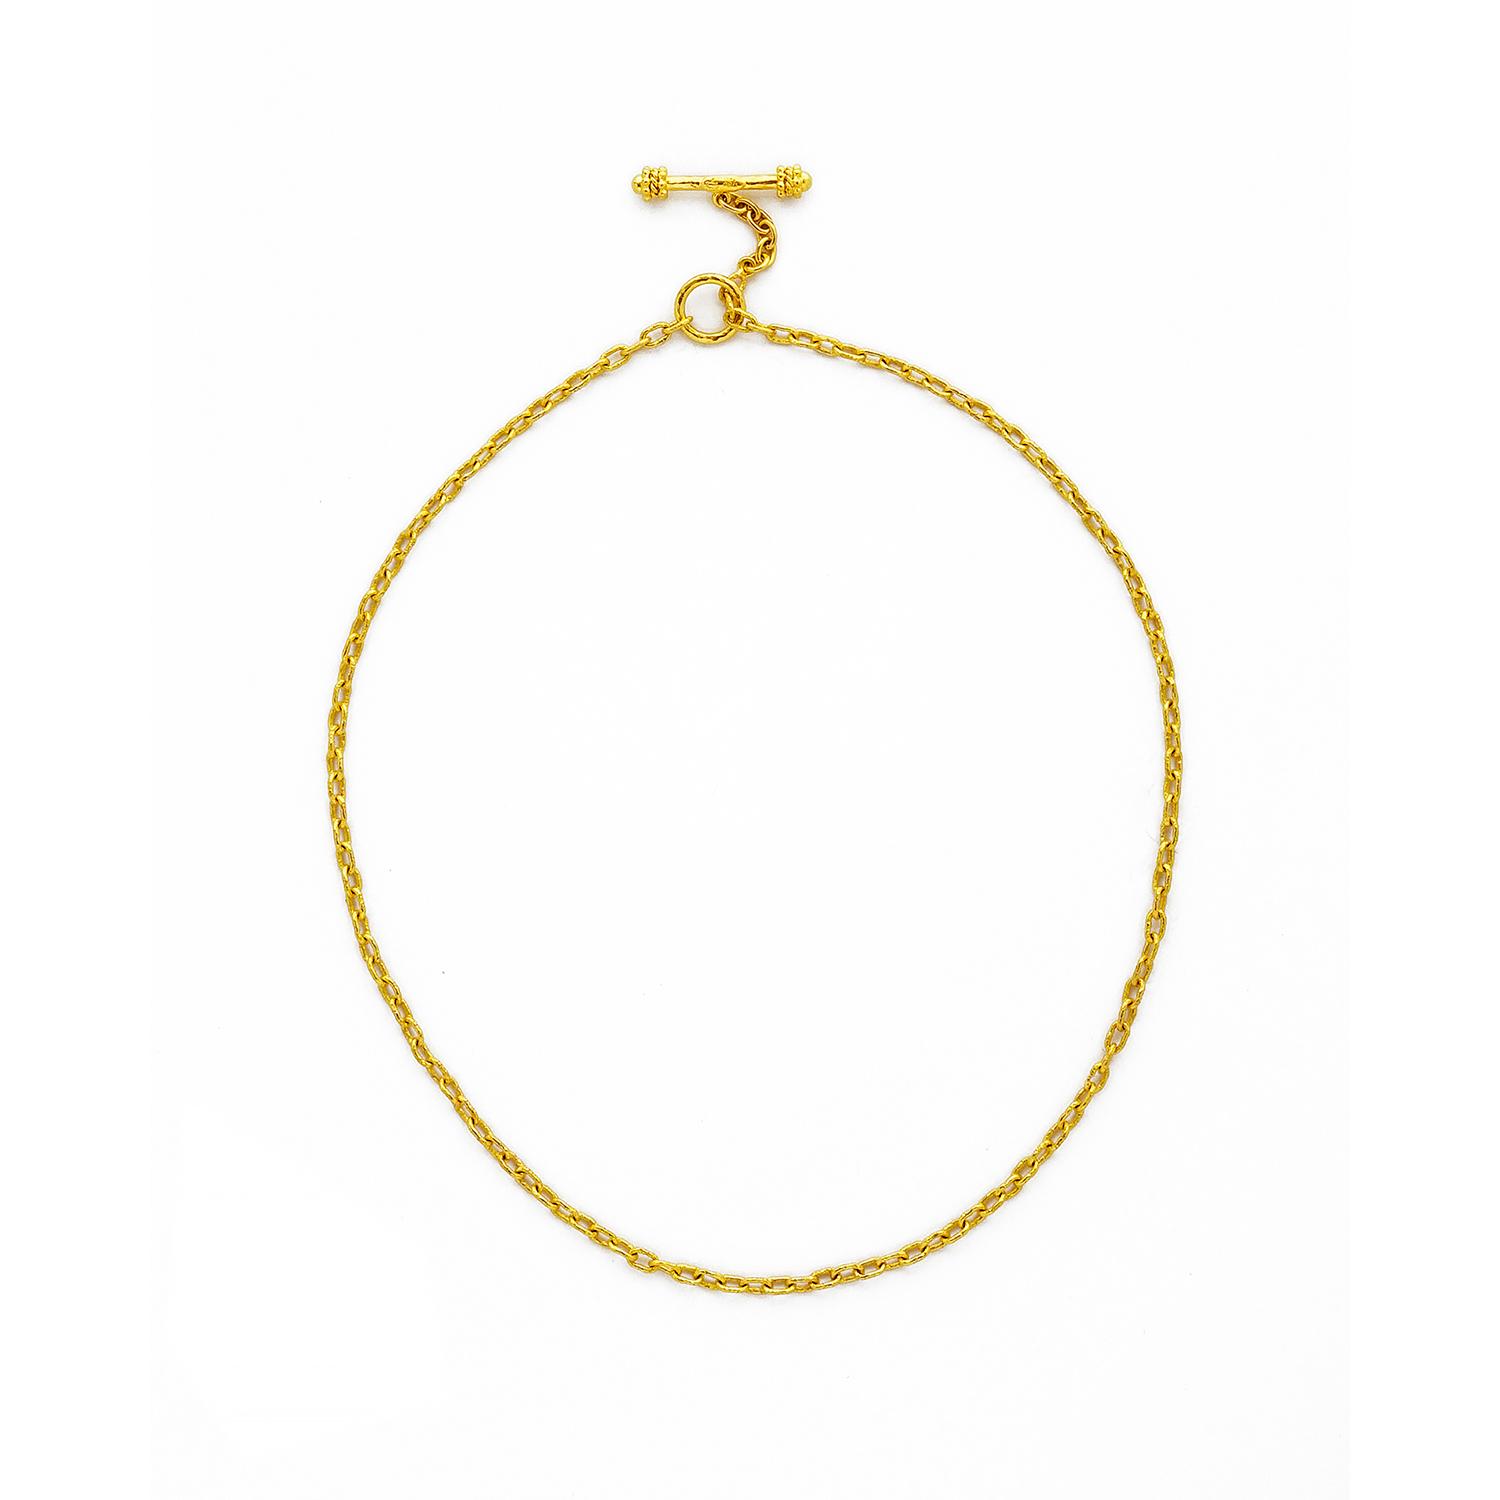 Elizabeth Locke Very Fine Gold Chain Necklace - 17 inches 